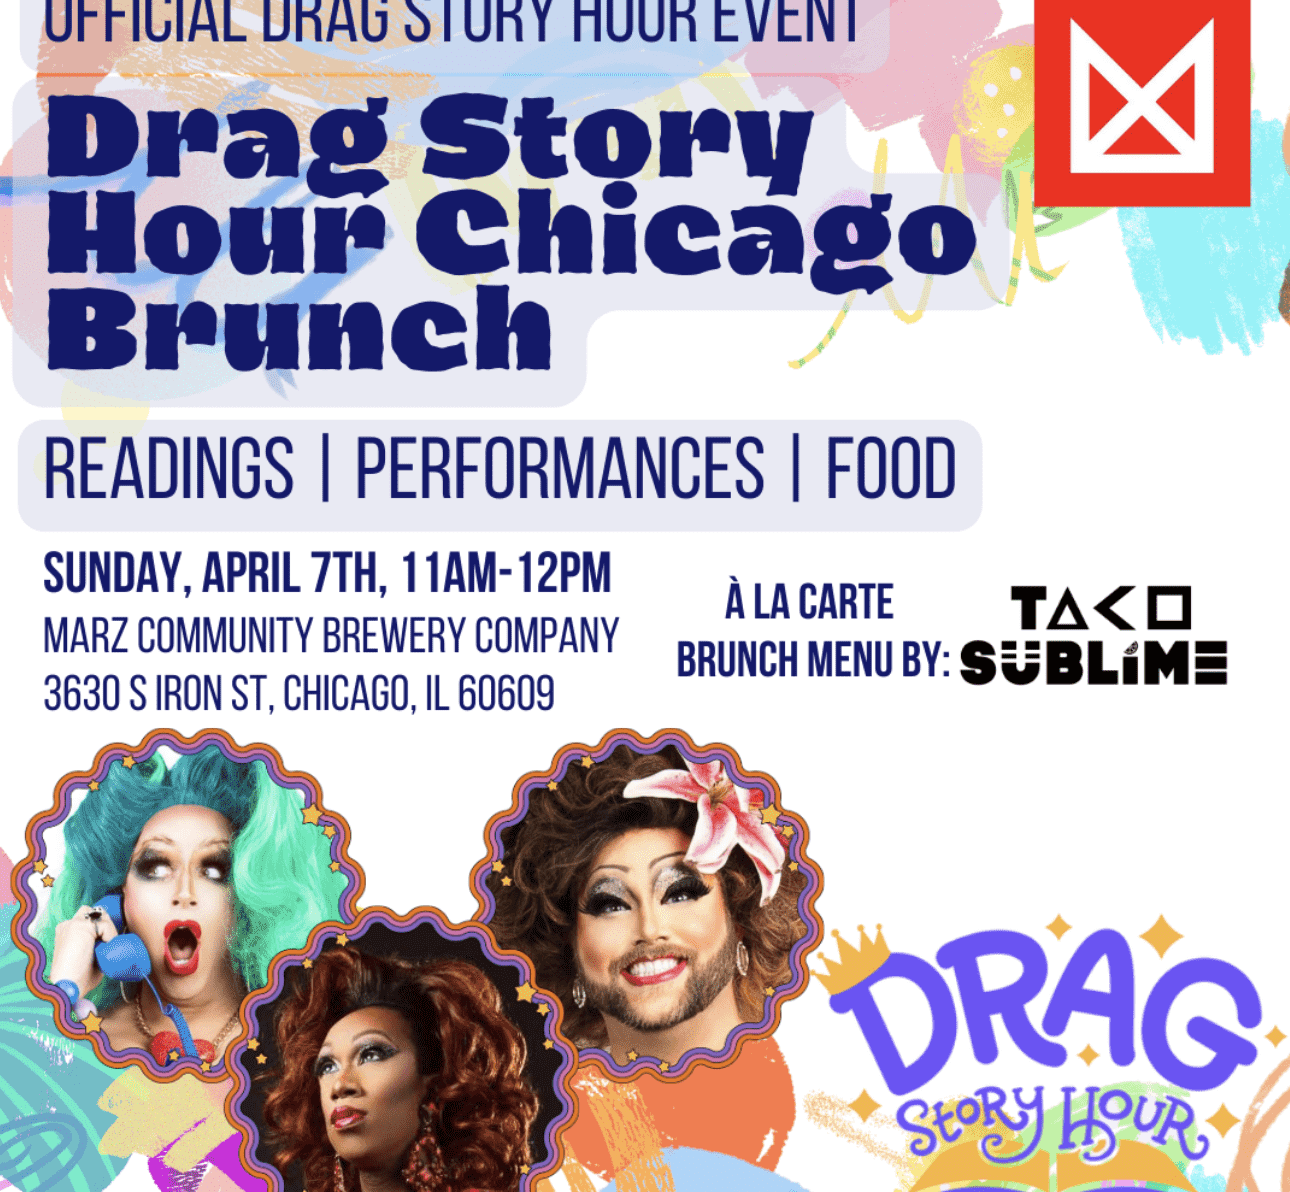 Drag Story Hour Chicago Brunch at Marz